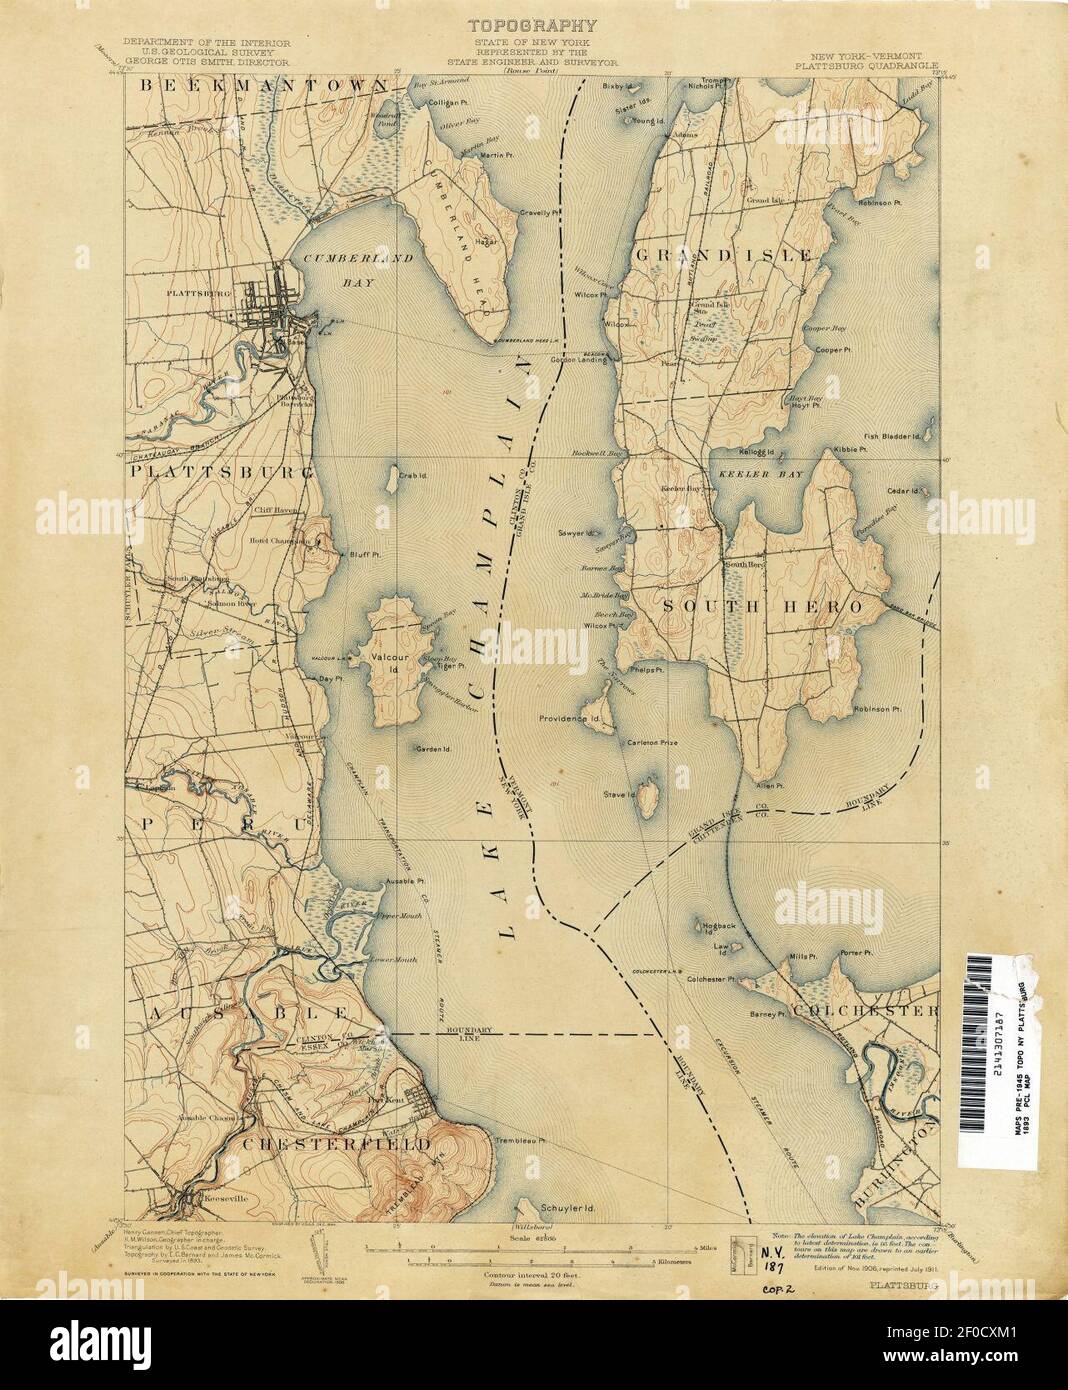 Plattsburg New York USGS topo map 1893. Stock Photo